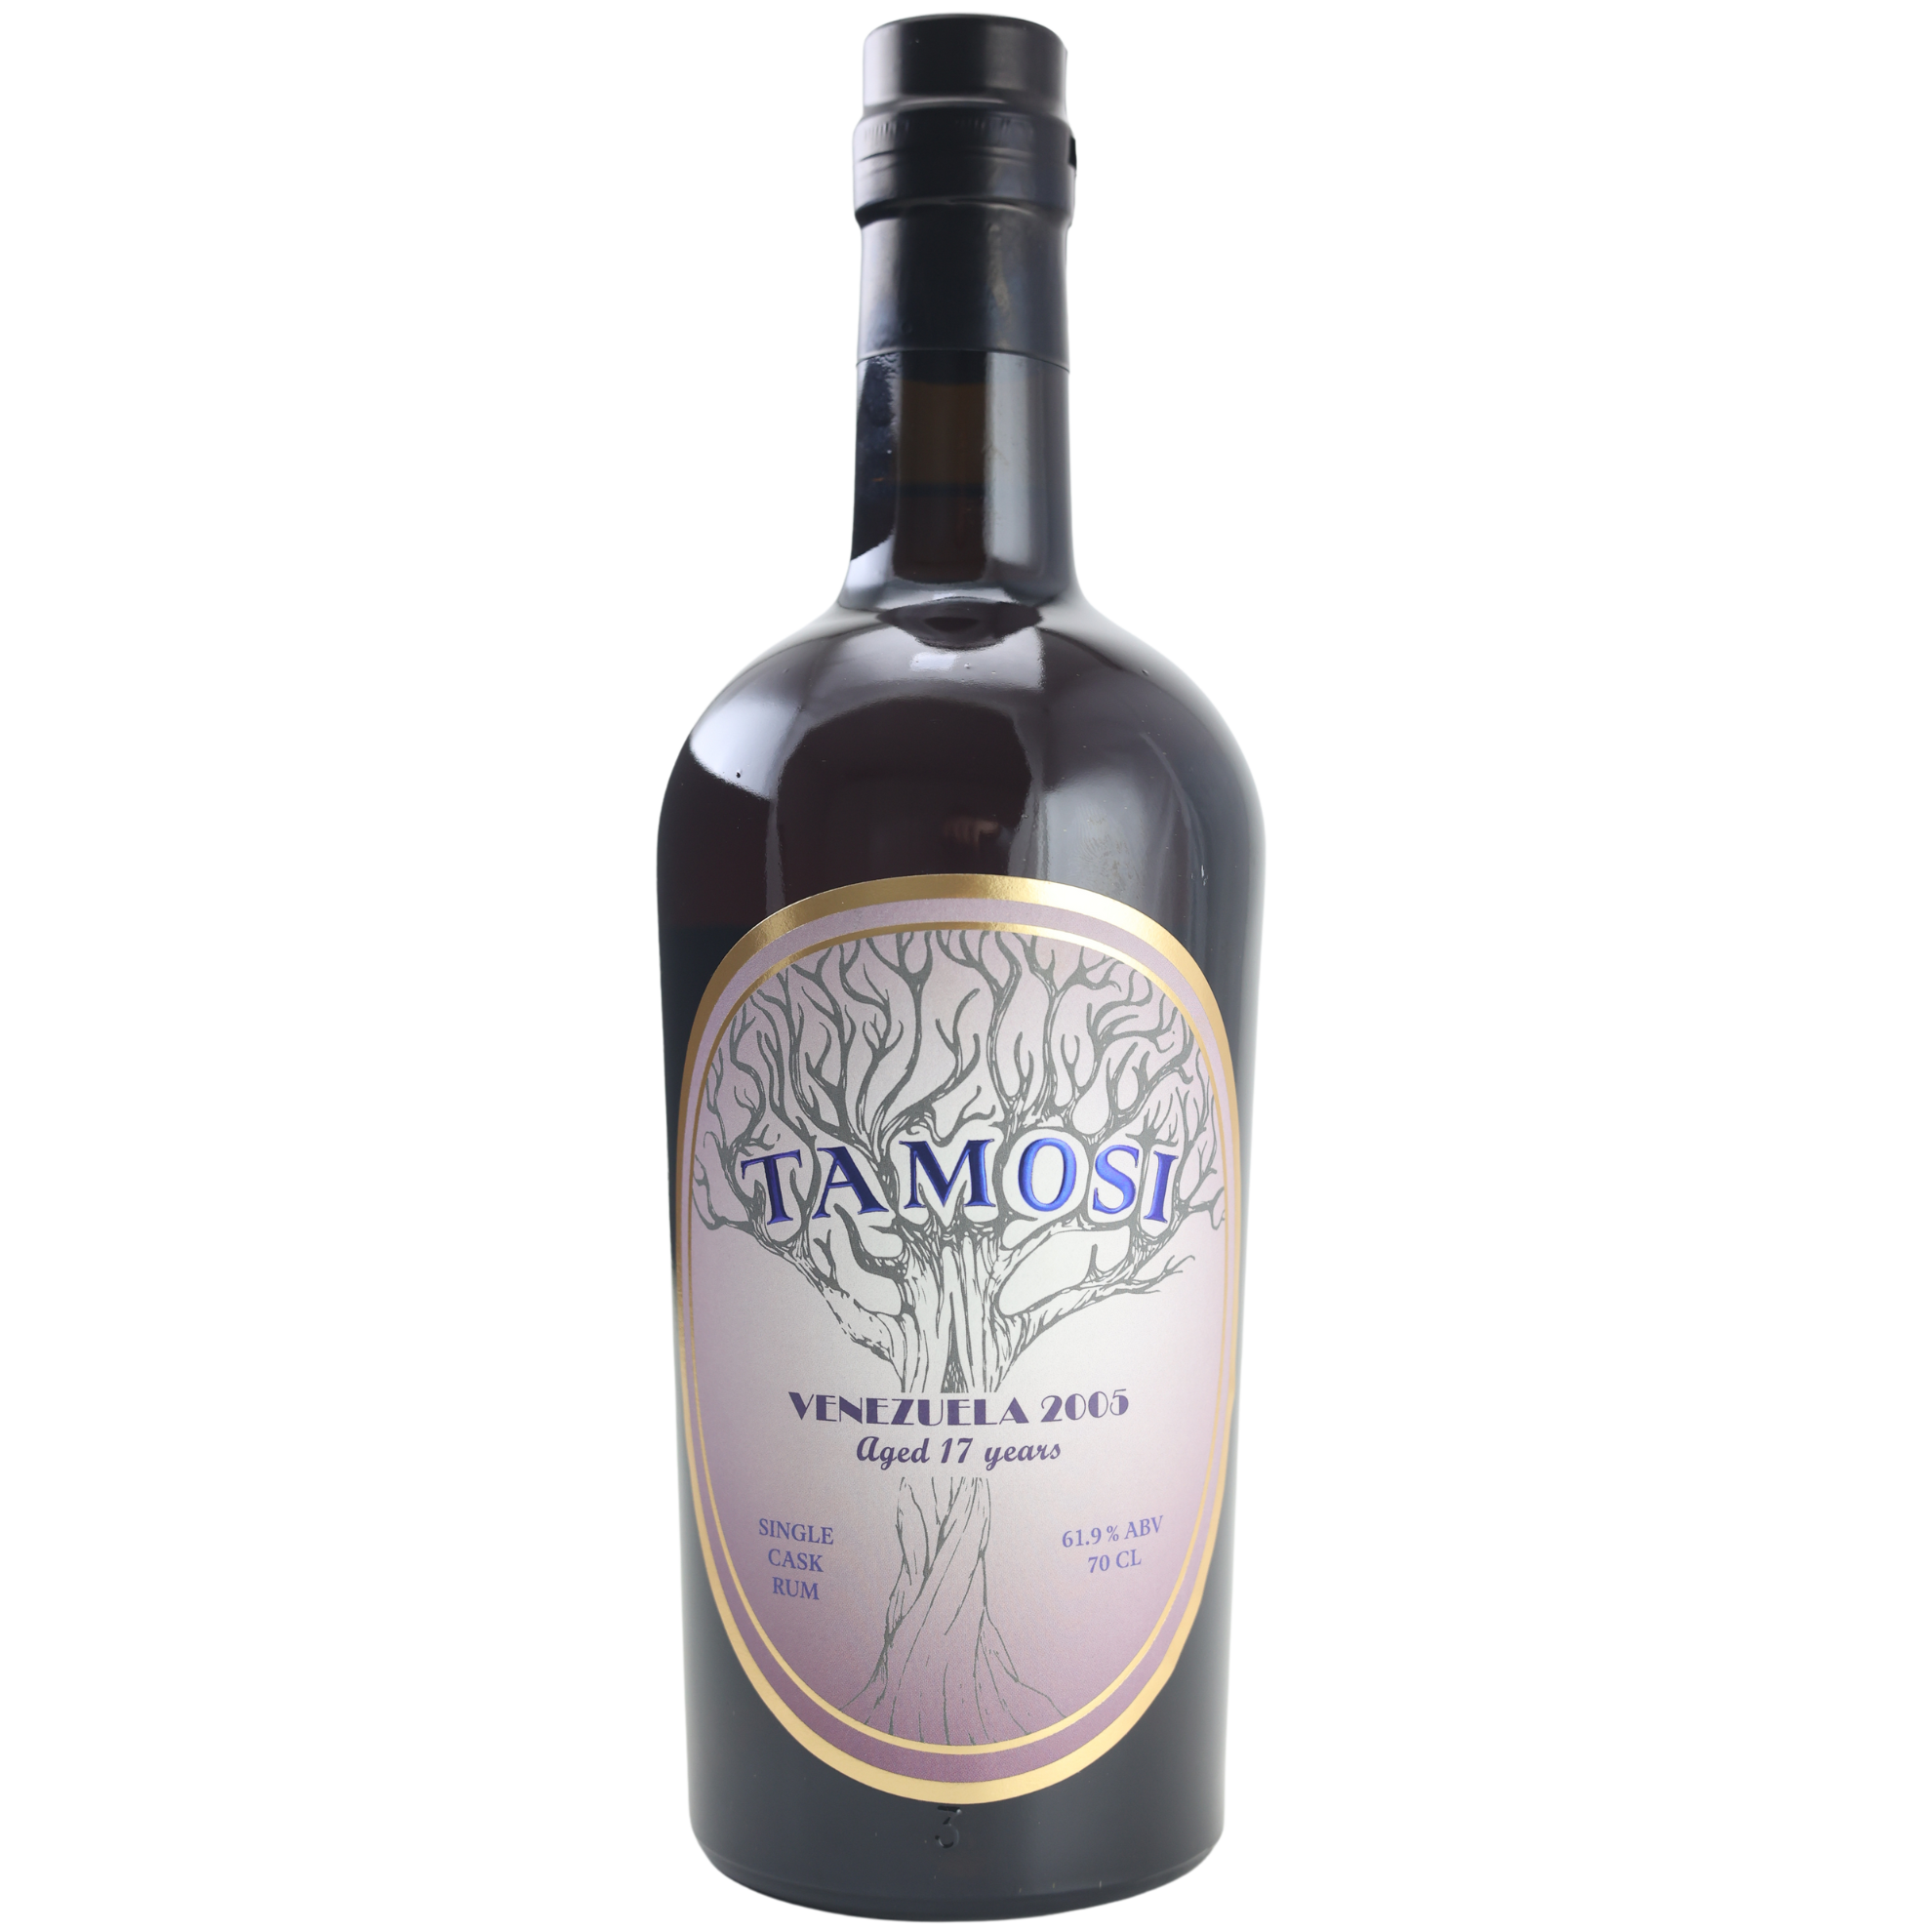 Tamosi Venezuela 2005 Single Cask Rum 61,9% 0,7l